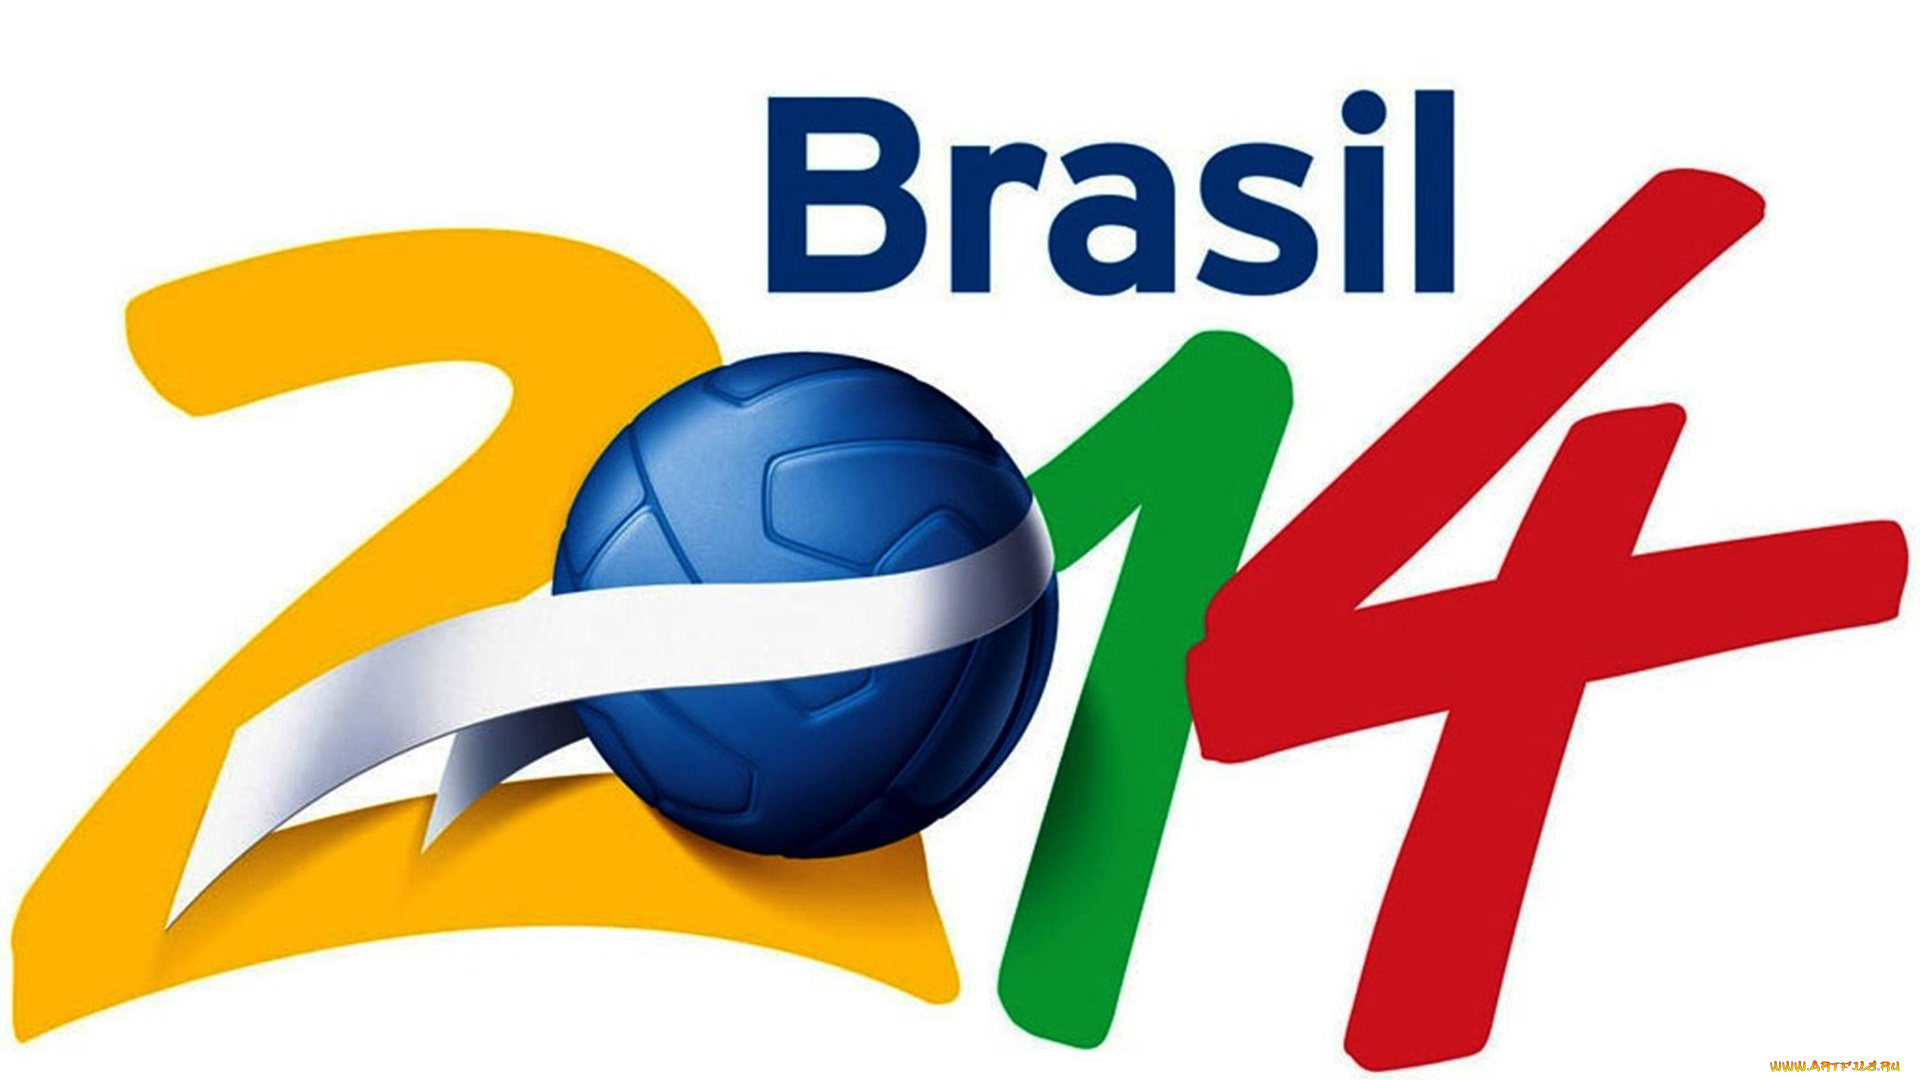 спорт, логотипы, турниров, чемпионат, логотип, эмблема, 2014, футбол, бразилия